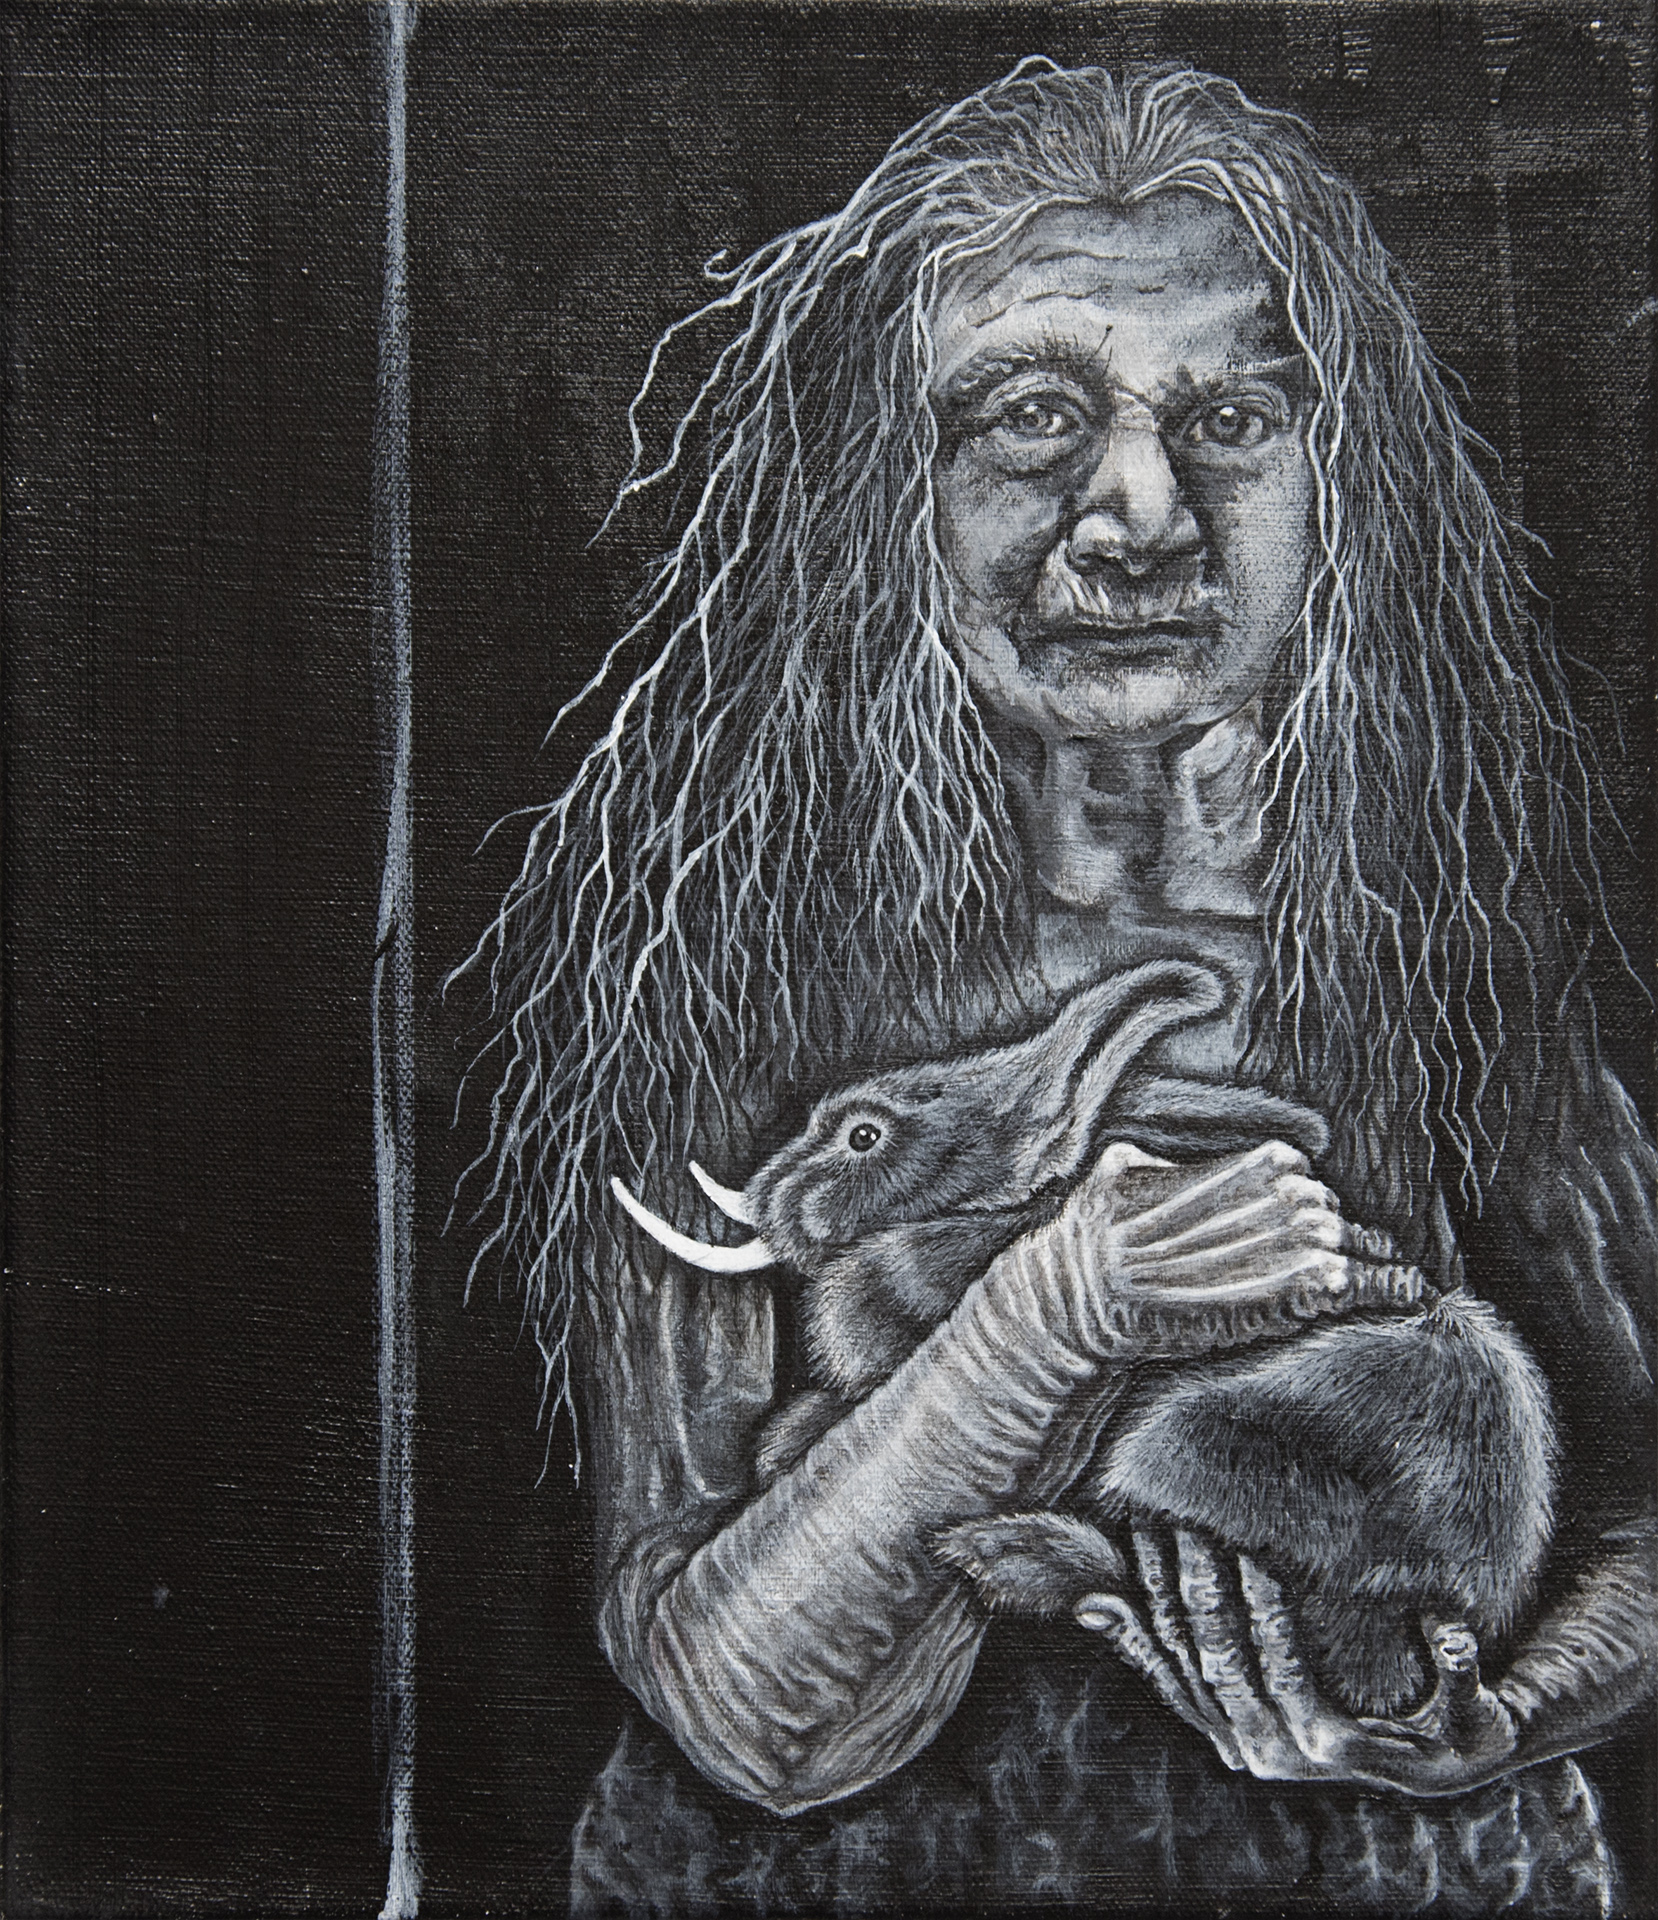 Rabbit with Tusks by Maria Schlomann